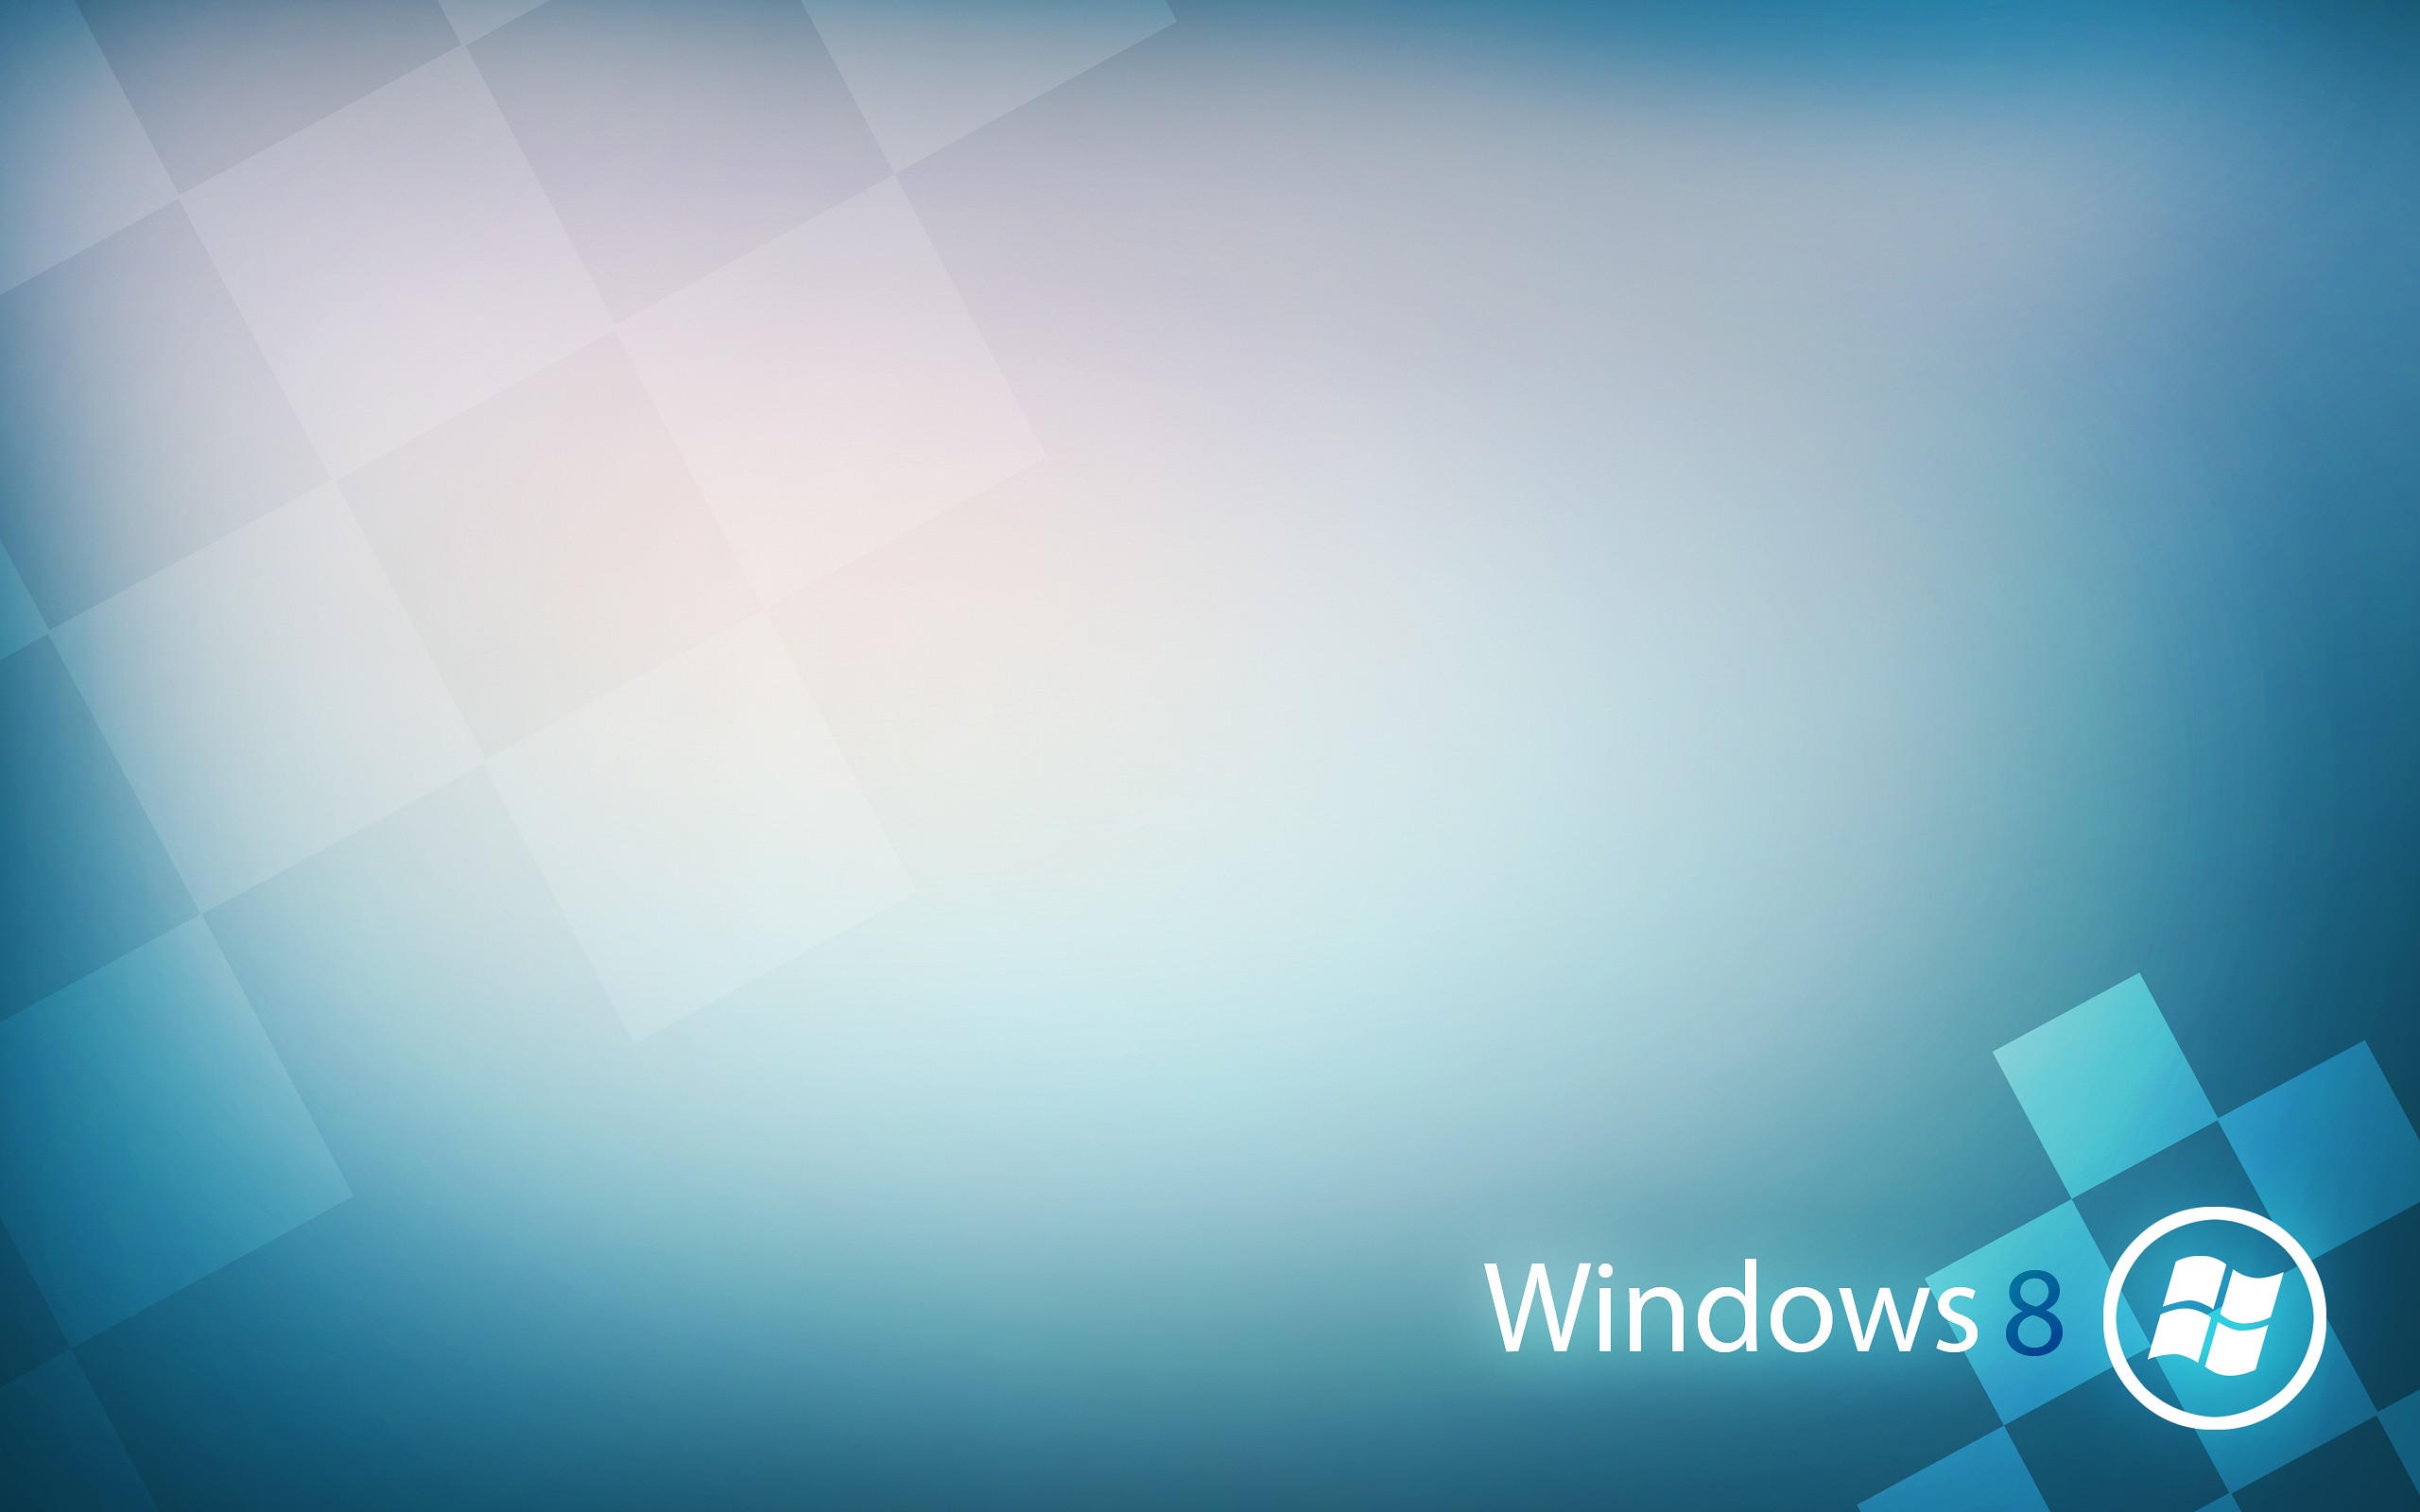 Download the Windows 8 Tiles Wallpaper, Windows 8 Tiles iPhone